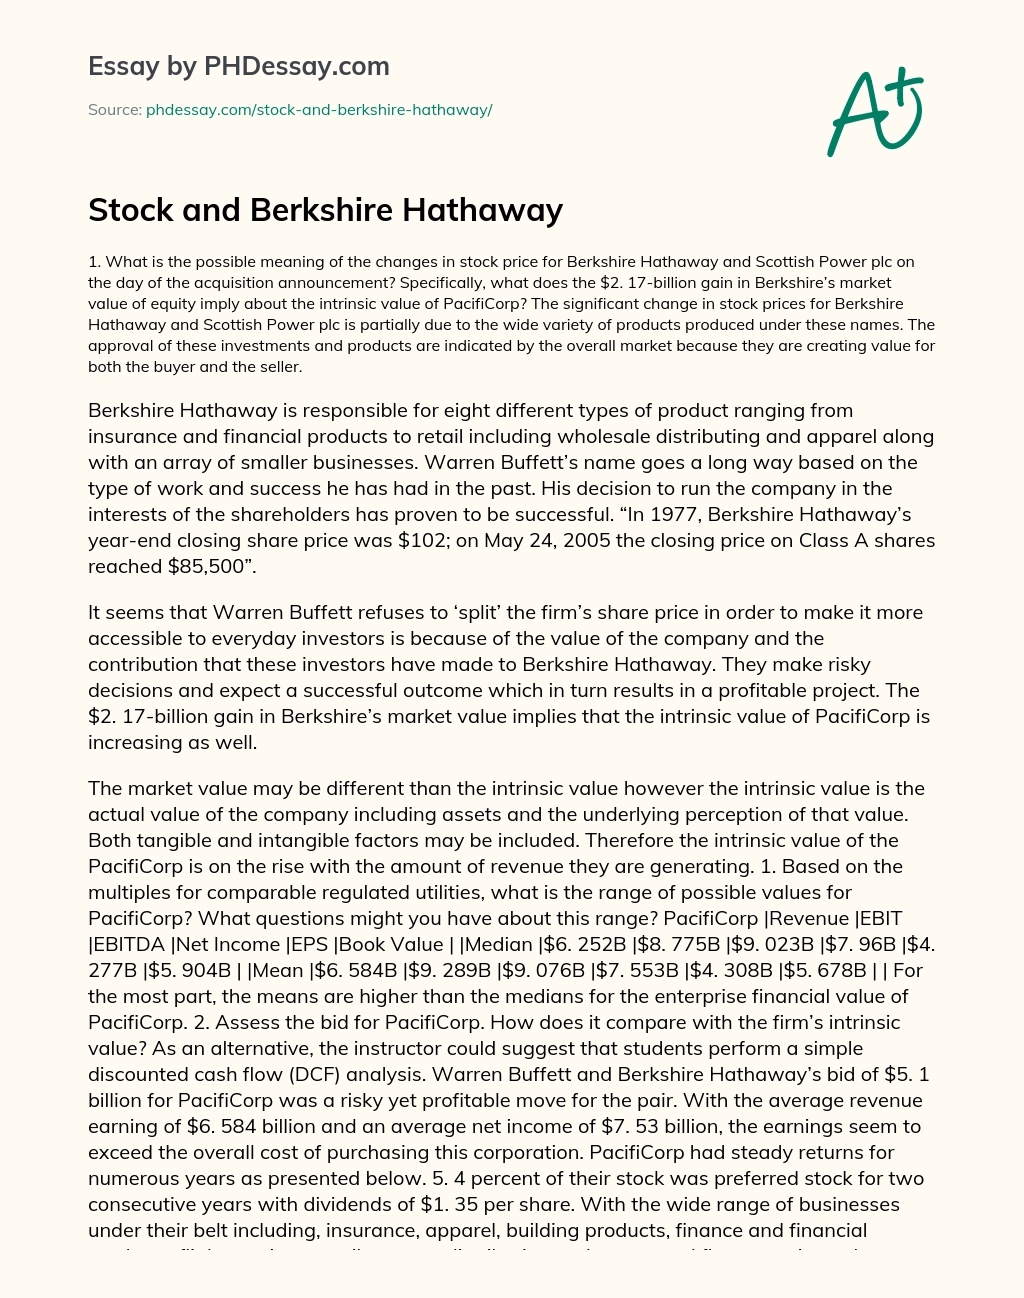 Stock and Berkshire Hathaway essay